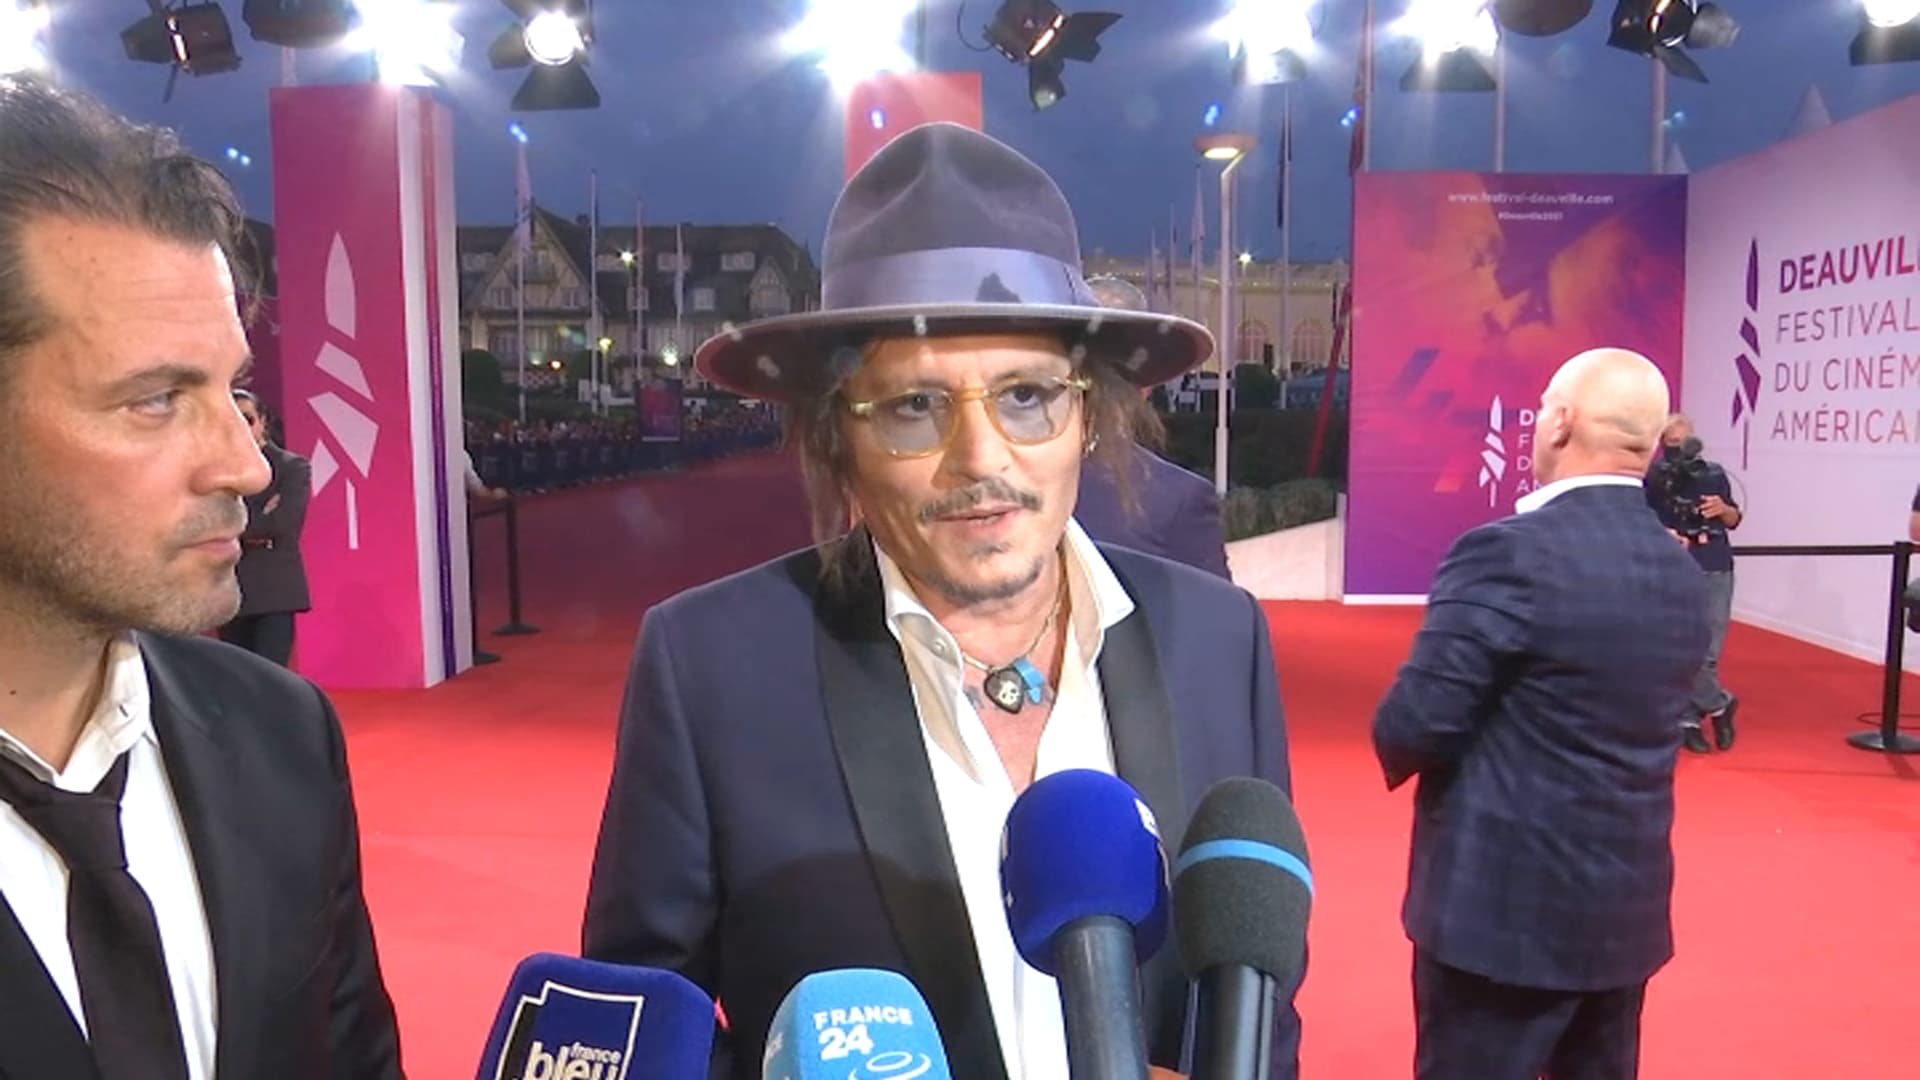  Johnny Depp au estival de Deauville @BFMTV